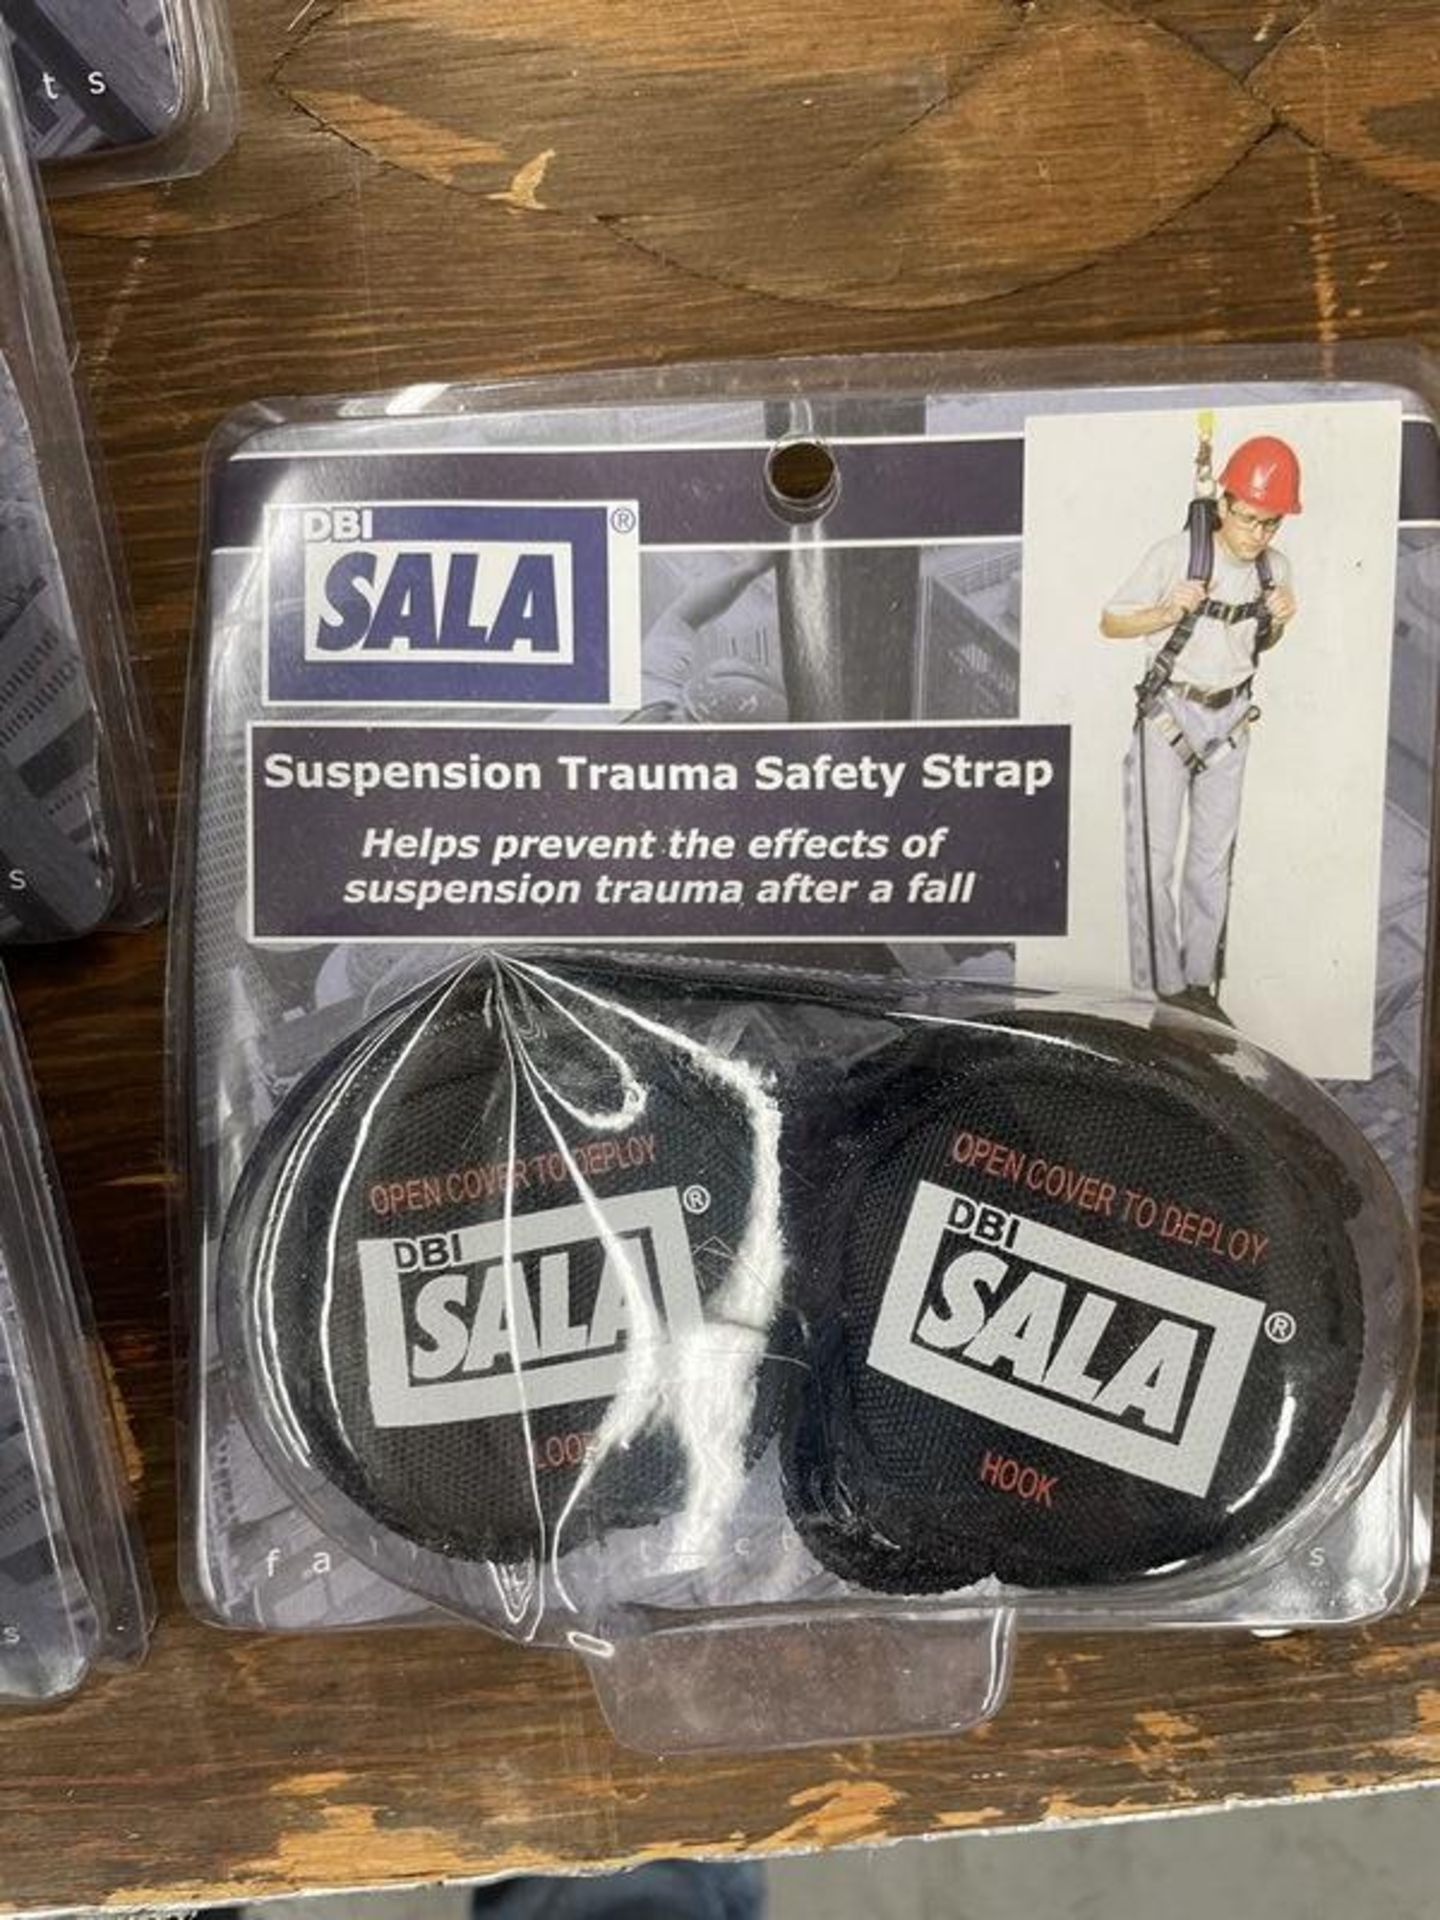 (5) Sala Suspension Trauma Safety Strap